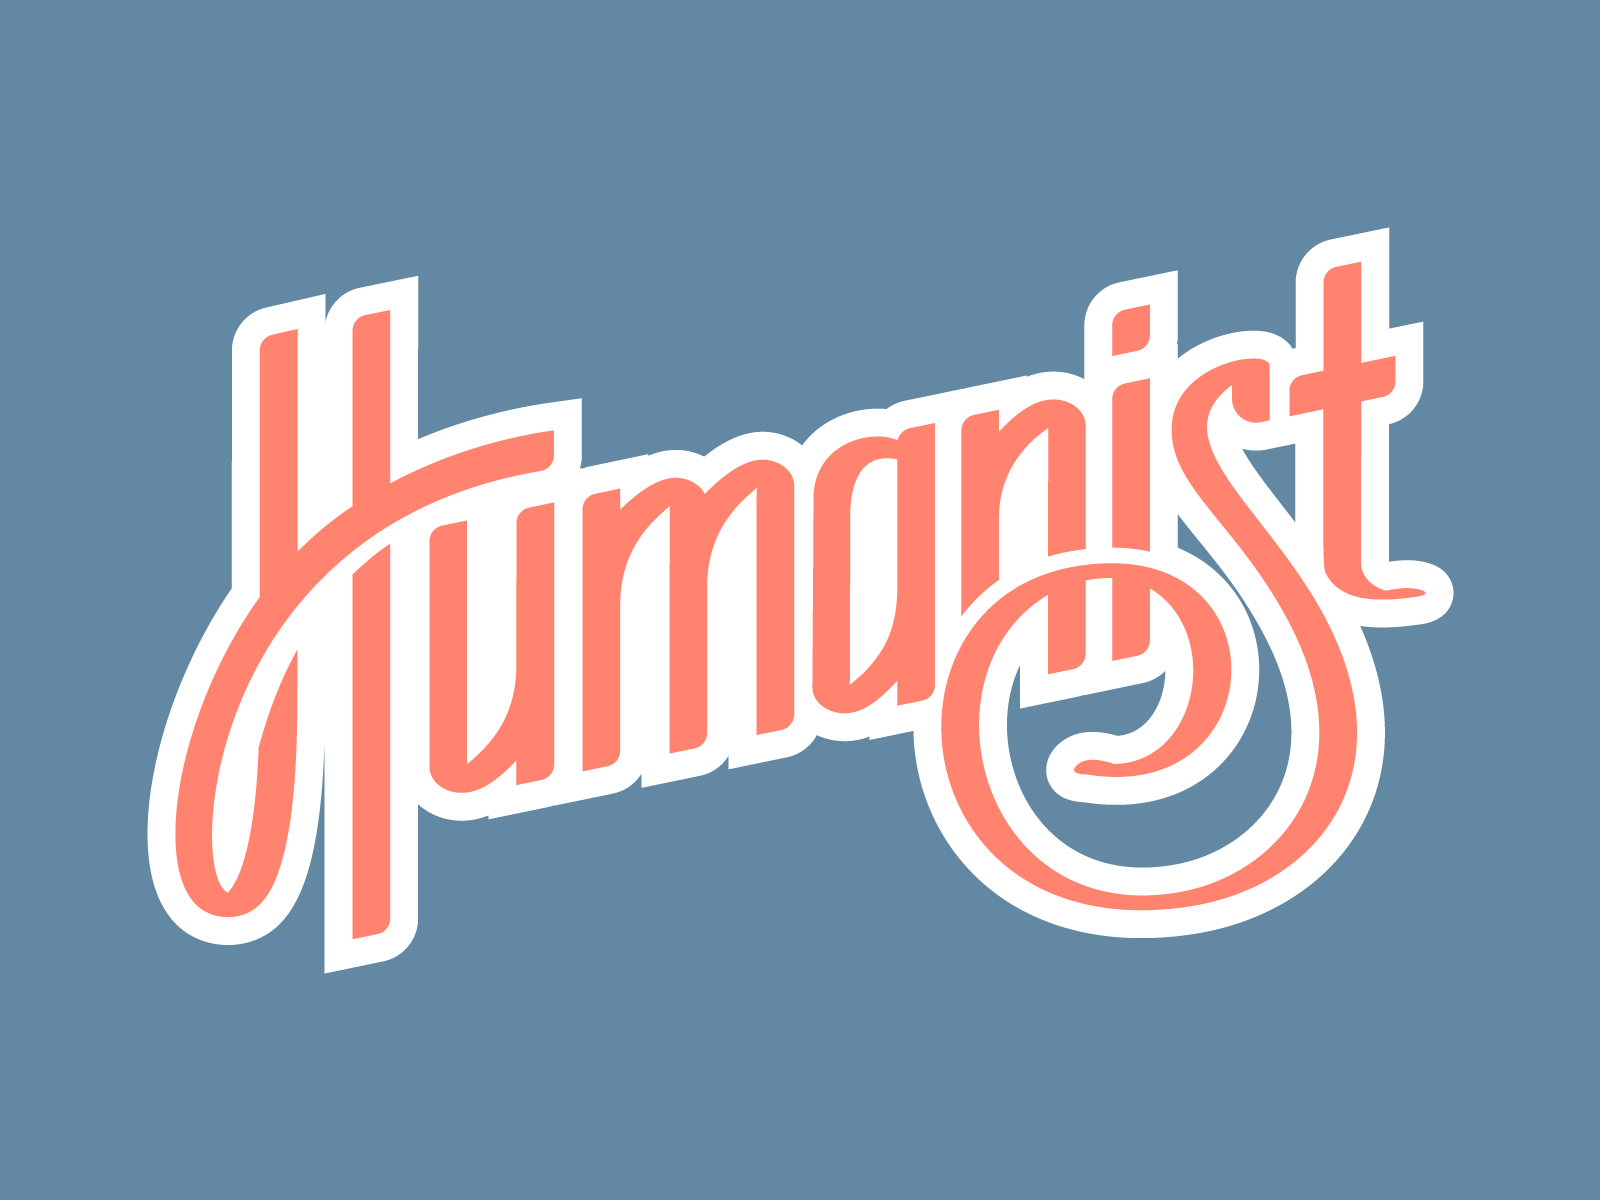 humanist typeface